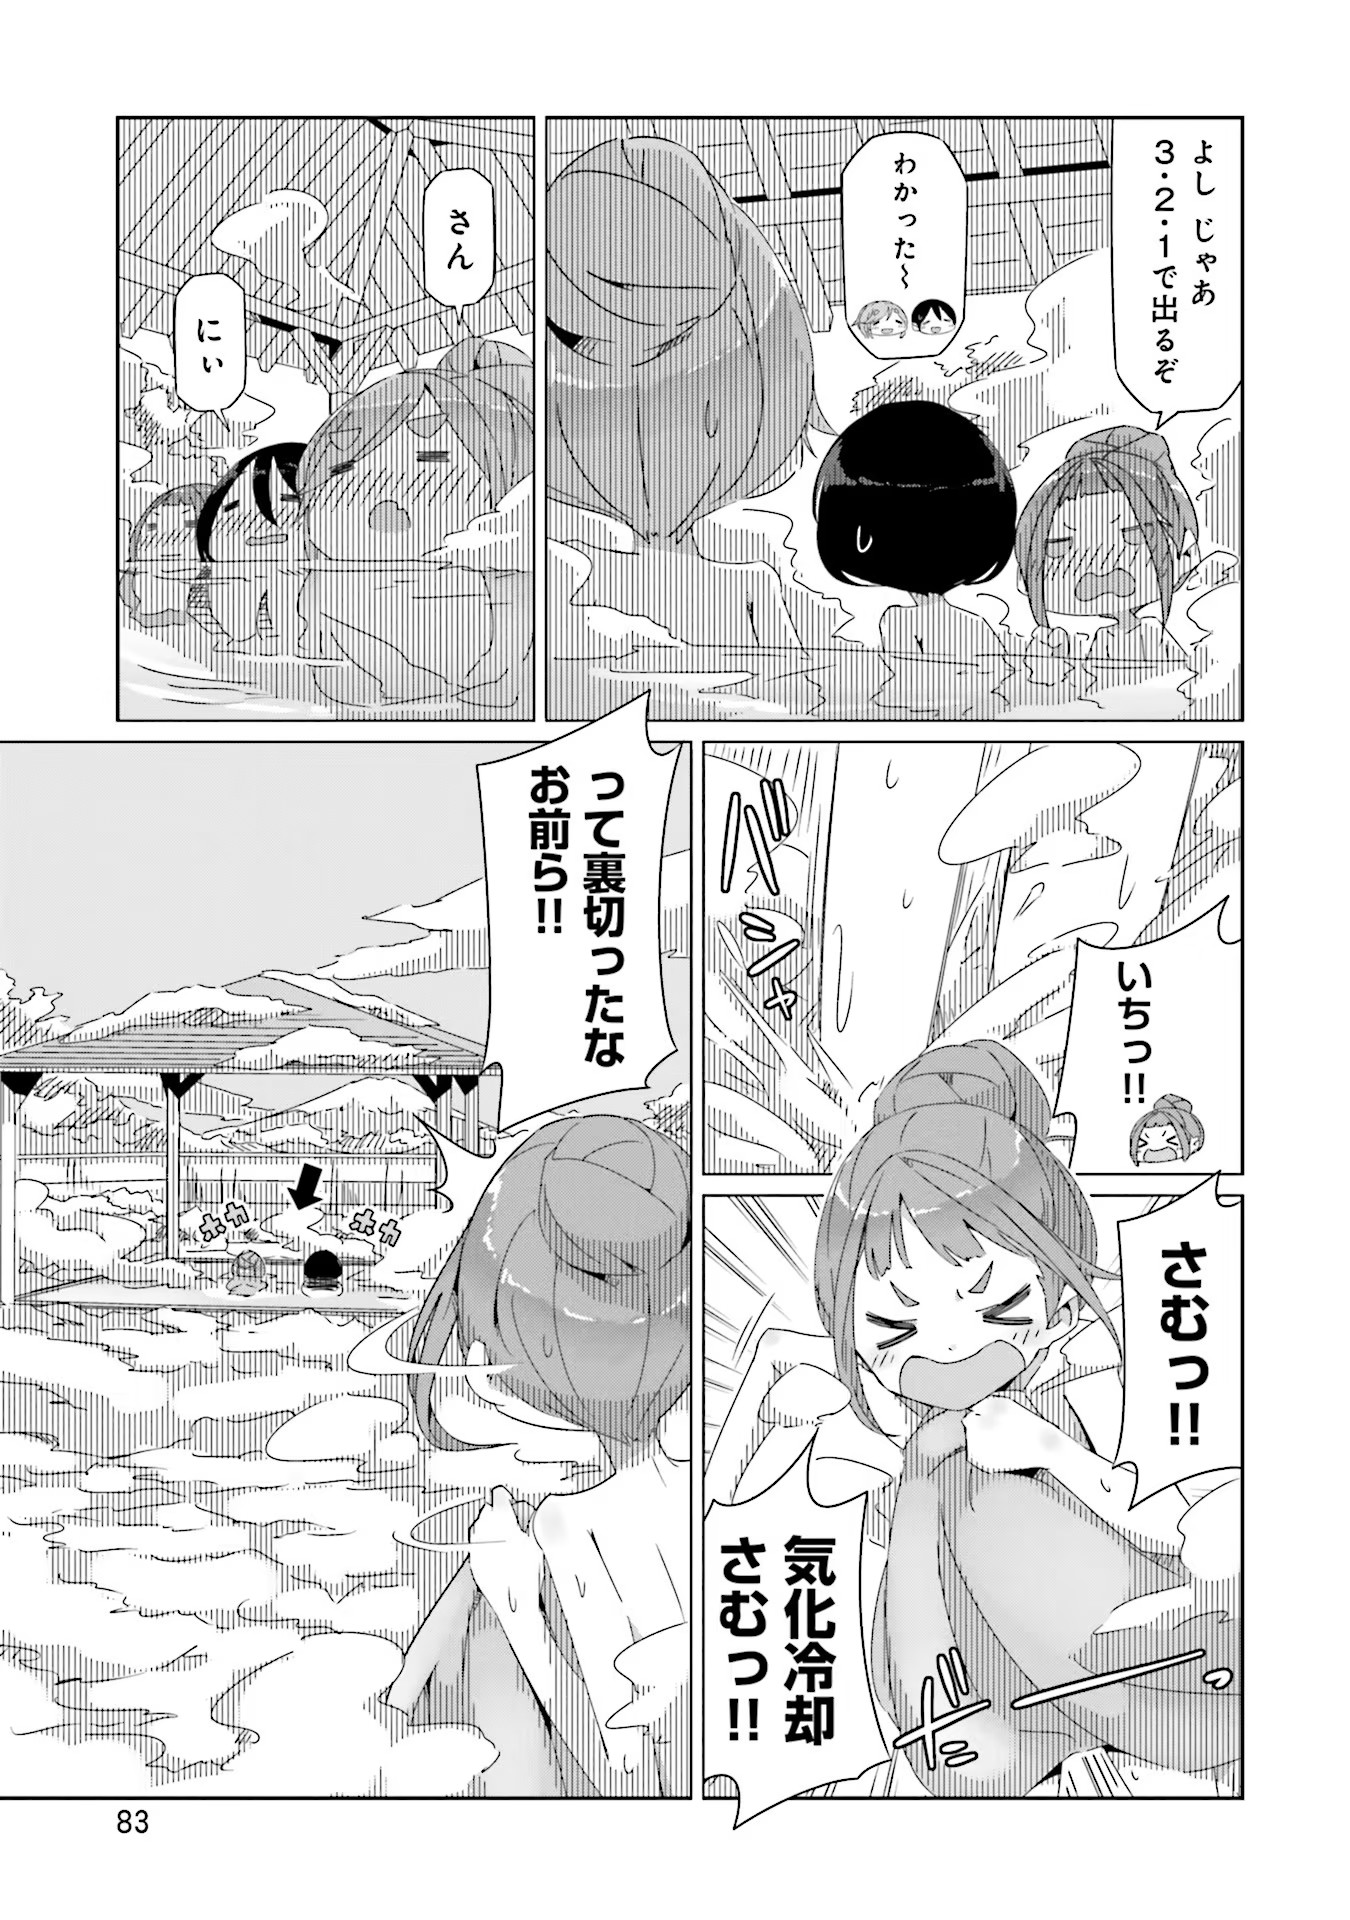 Yuru Camp - Chapter 32 - Page 3